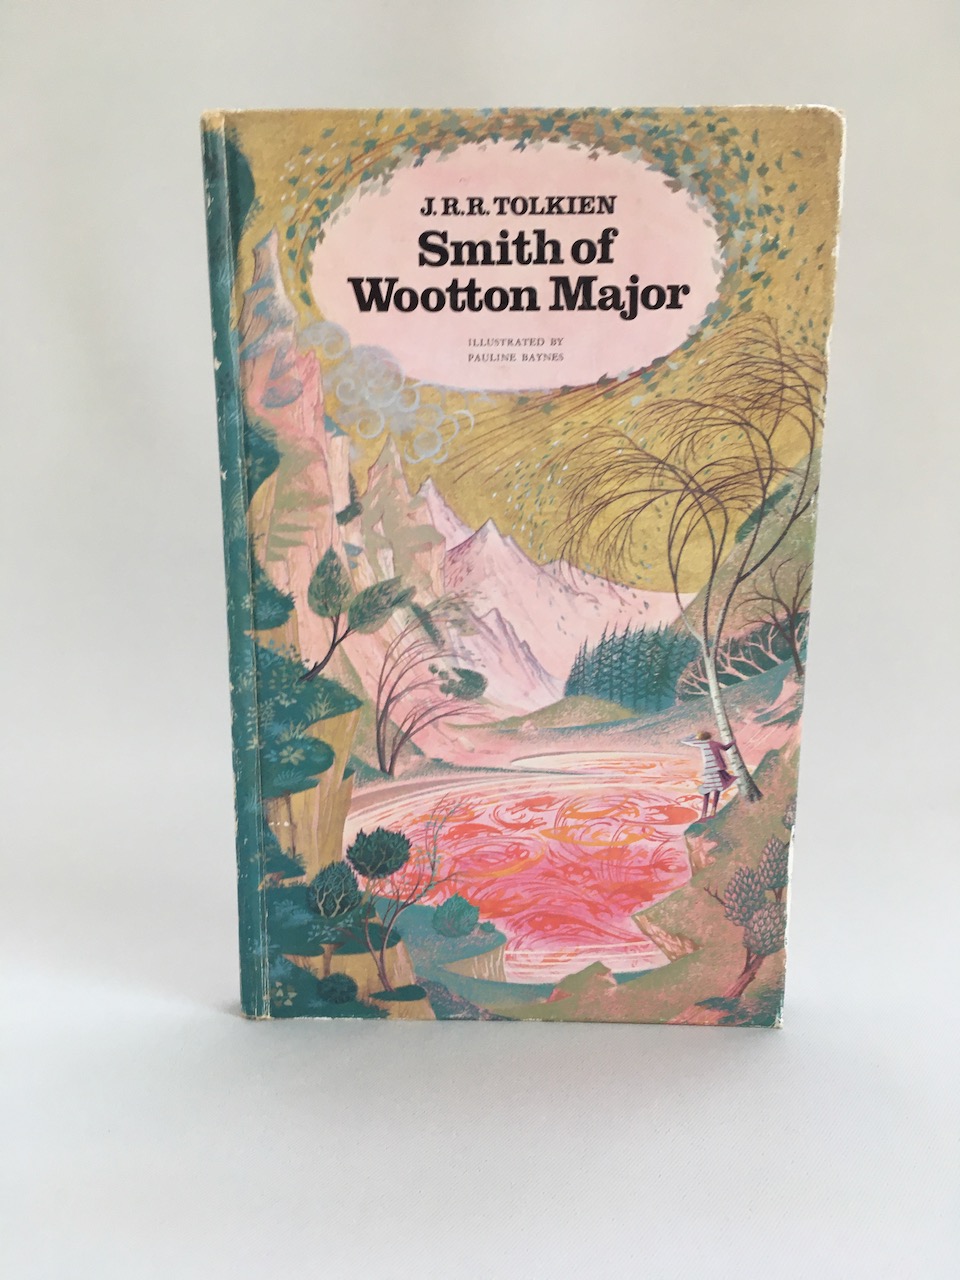 Smith of Wootton Major by J.R.R. Tolkien – Houghton Mifflin Impression Unknown